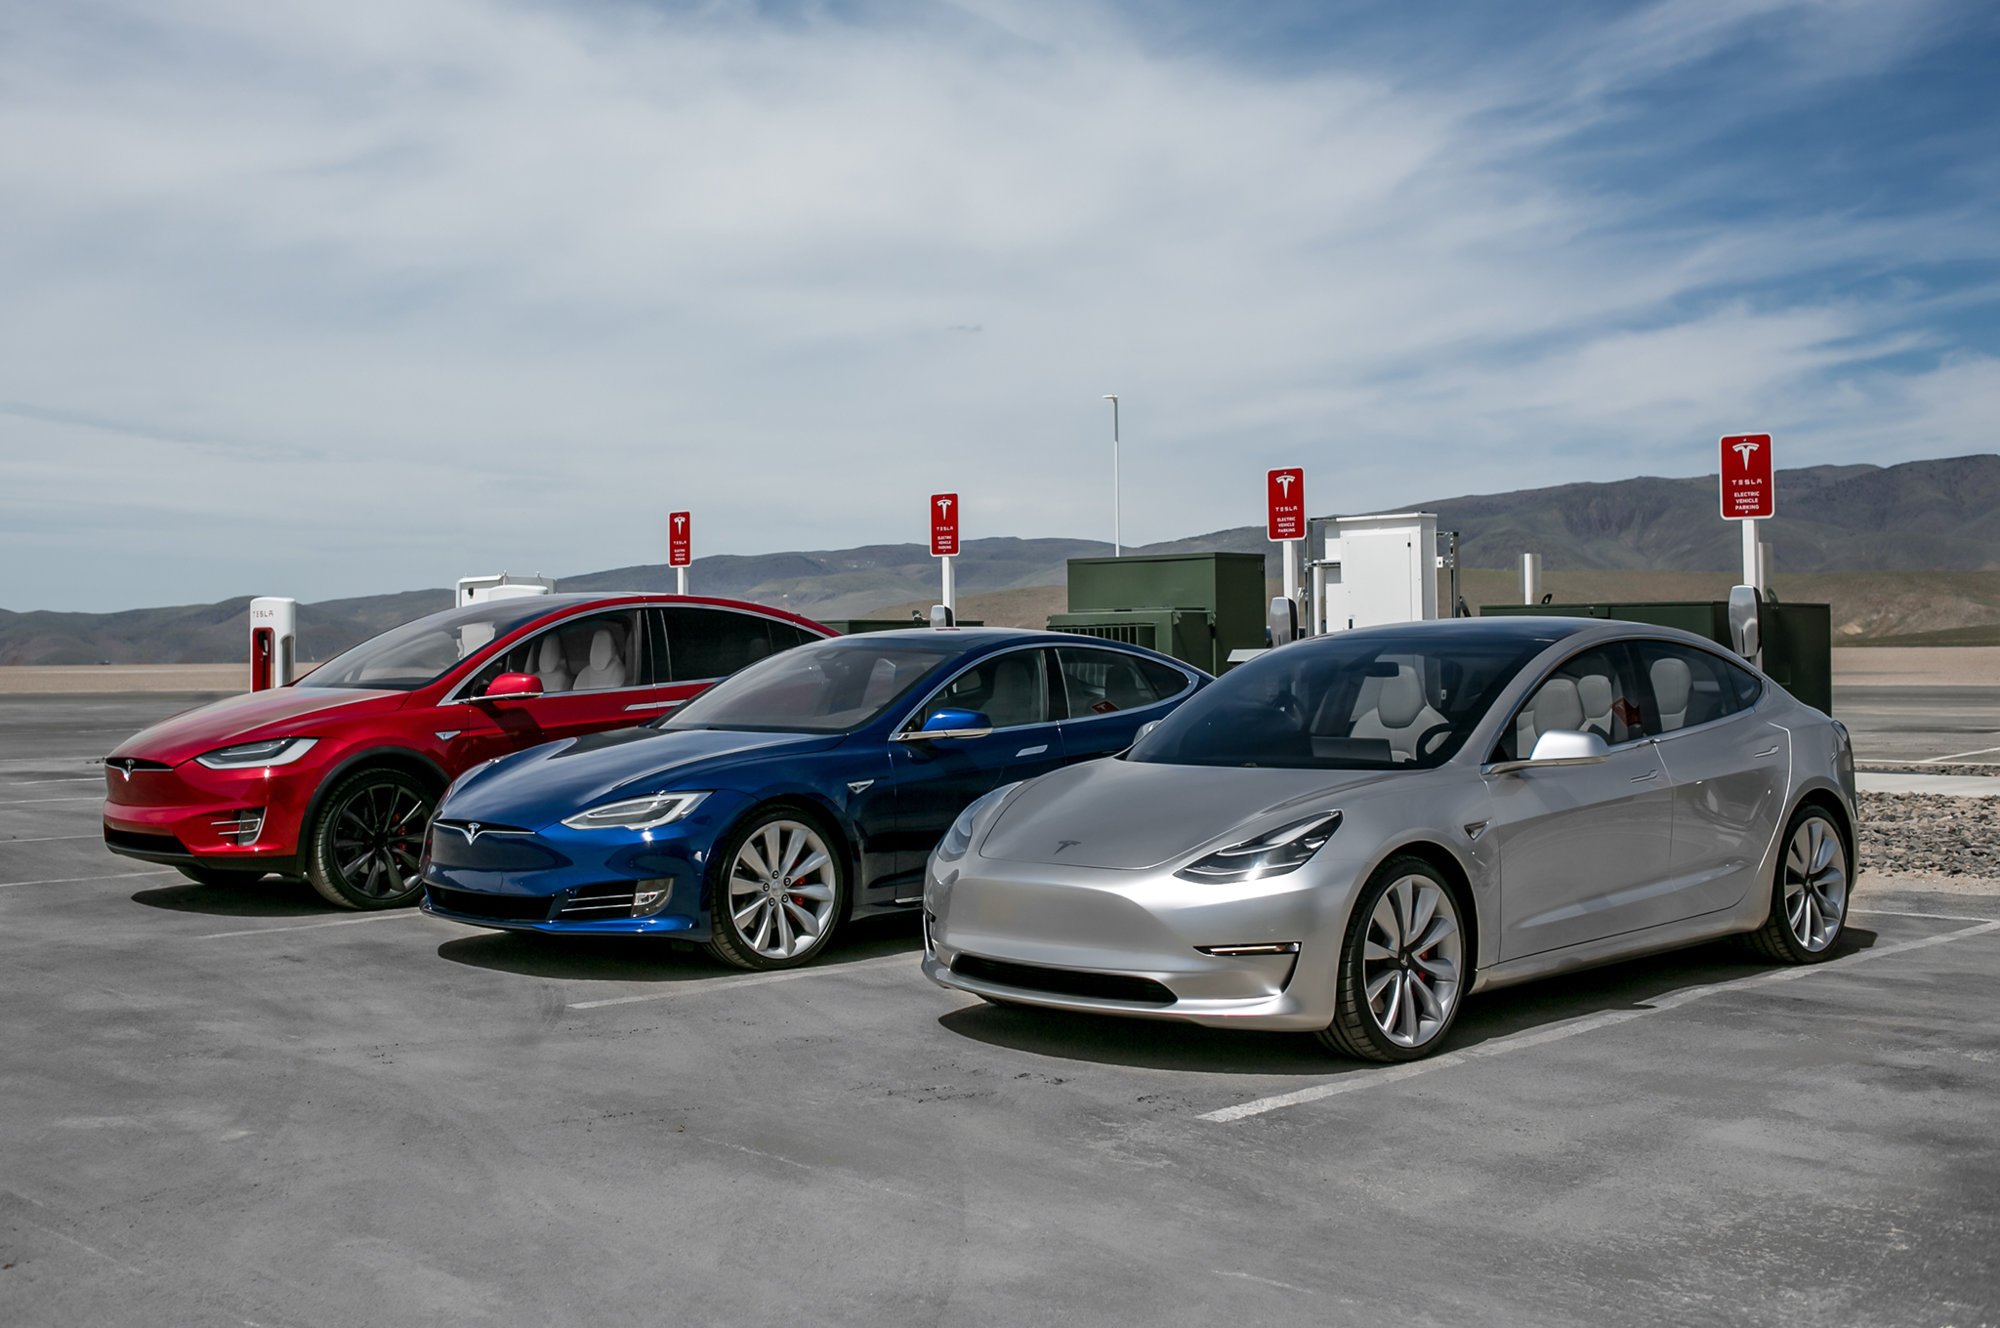 2017-Tesla-Model-3-2016-Tesla-Model-X-Tesla-Model-S-charging-stations.jpg